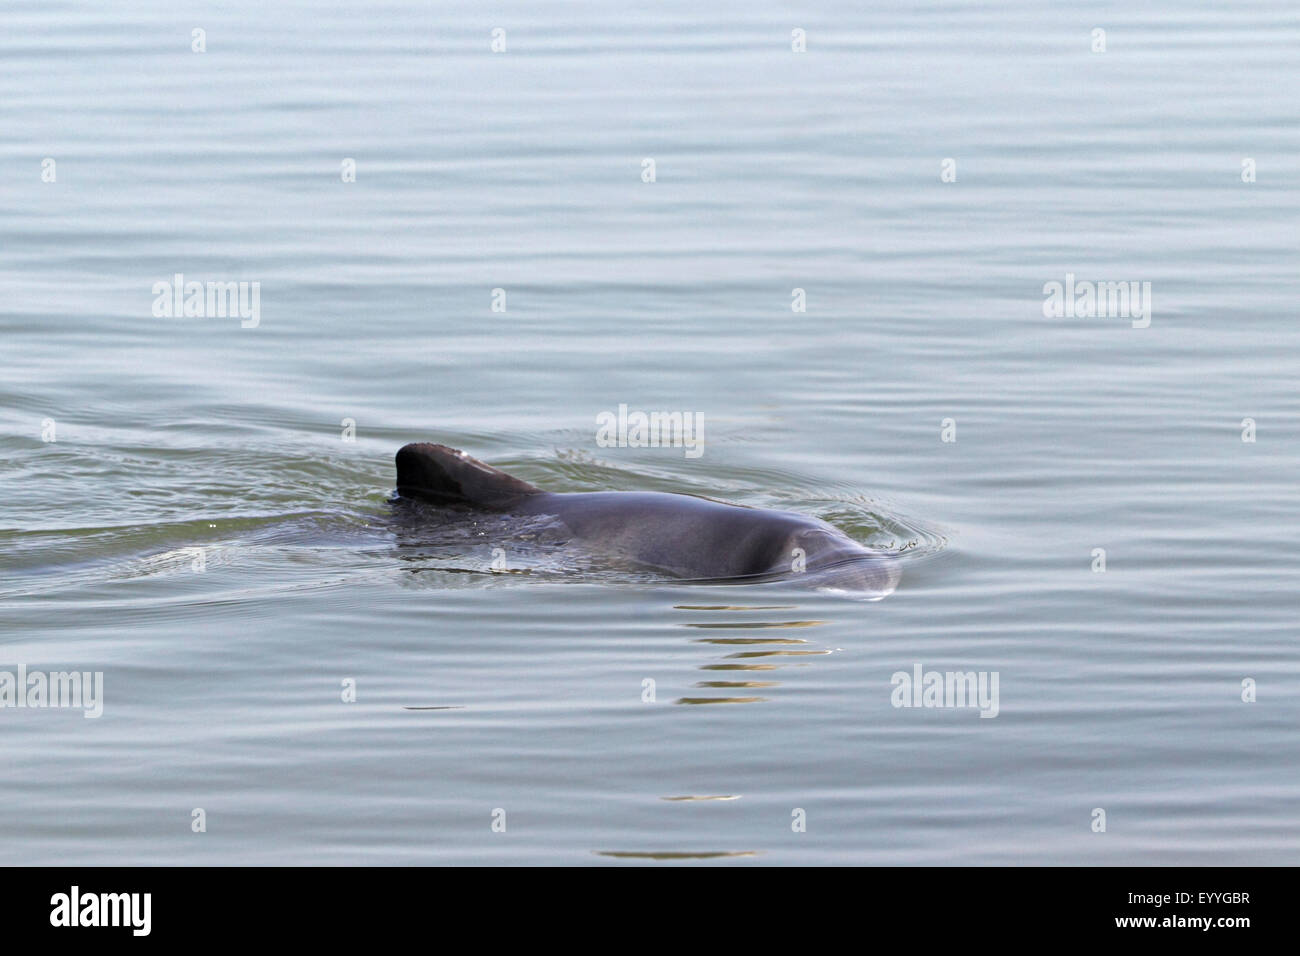 Phoecaena phoecaena (Phoecaena phoecaena), swims at the water surface, Netherlands, Frisia, Breezand Stock Photo